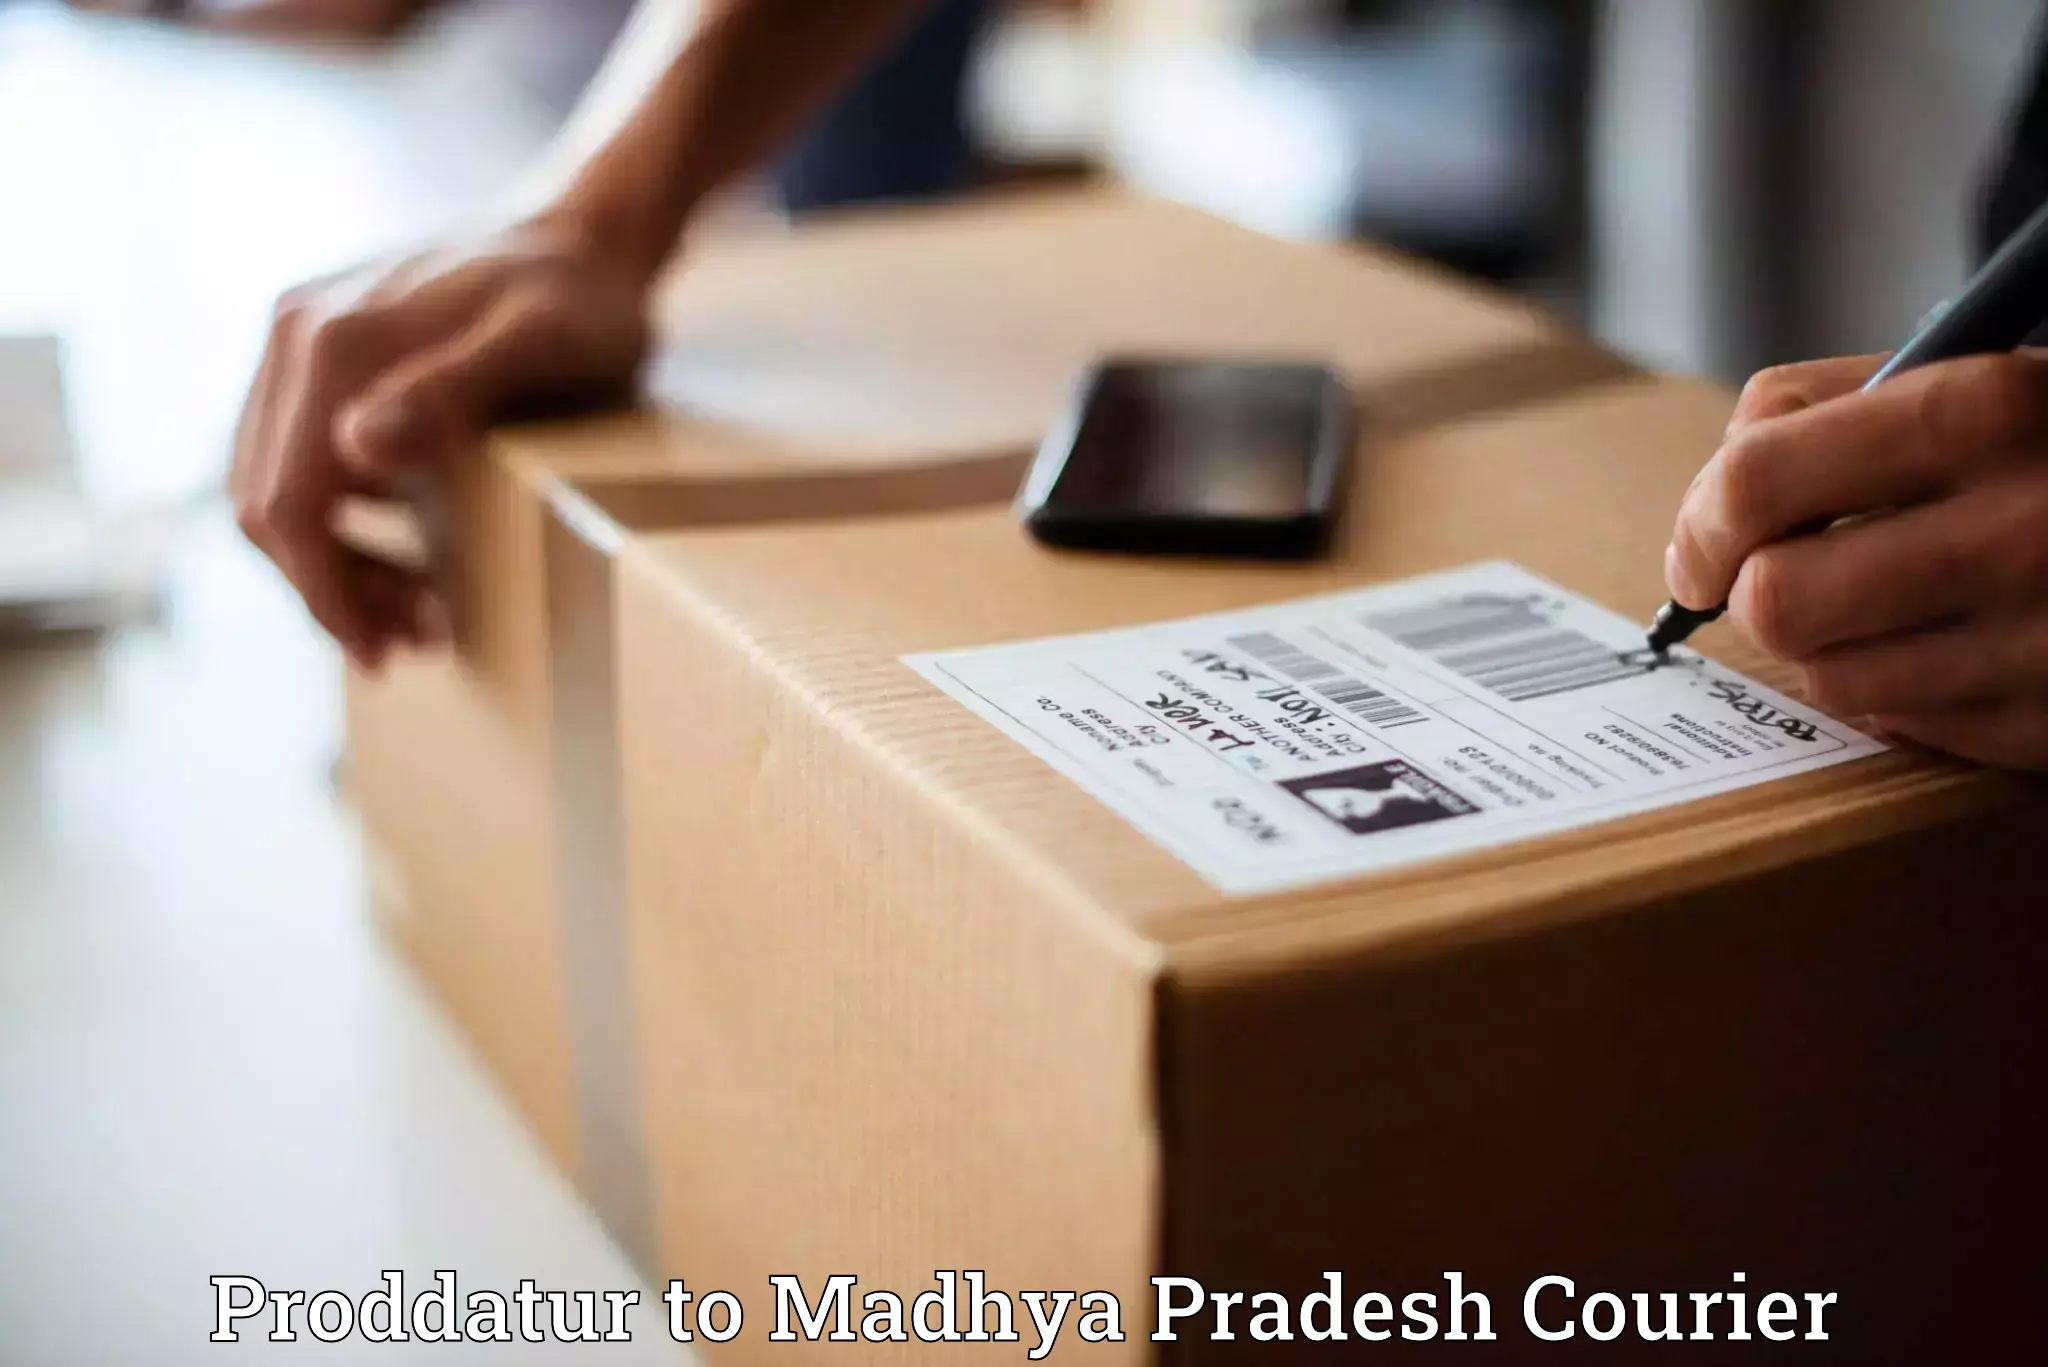 Modern delivery technologies Proddatur to Madhya Pradesh